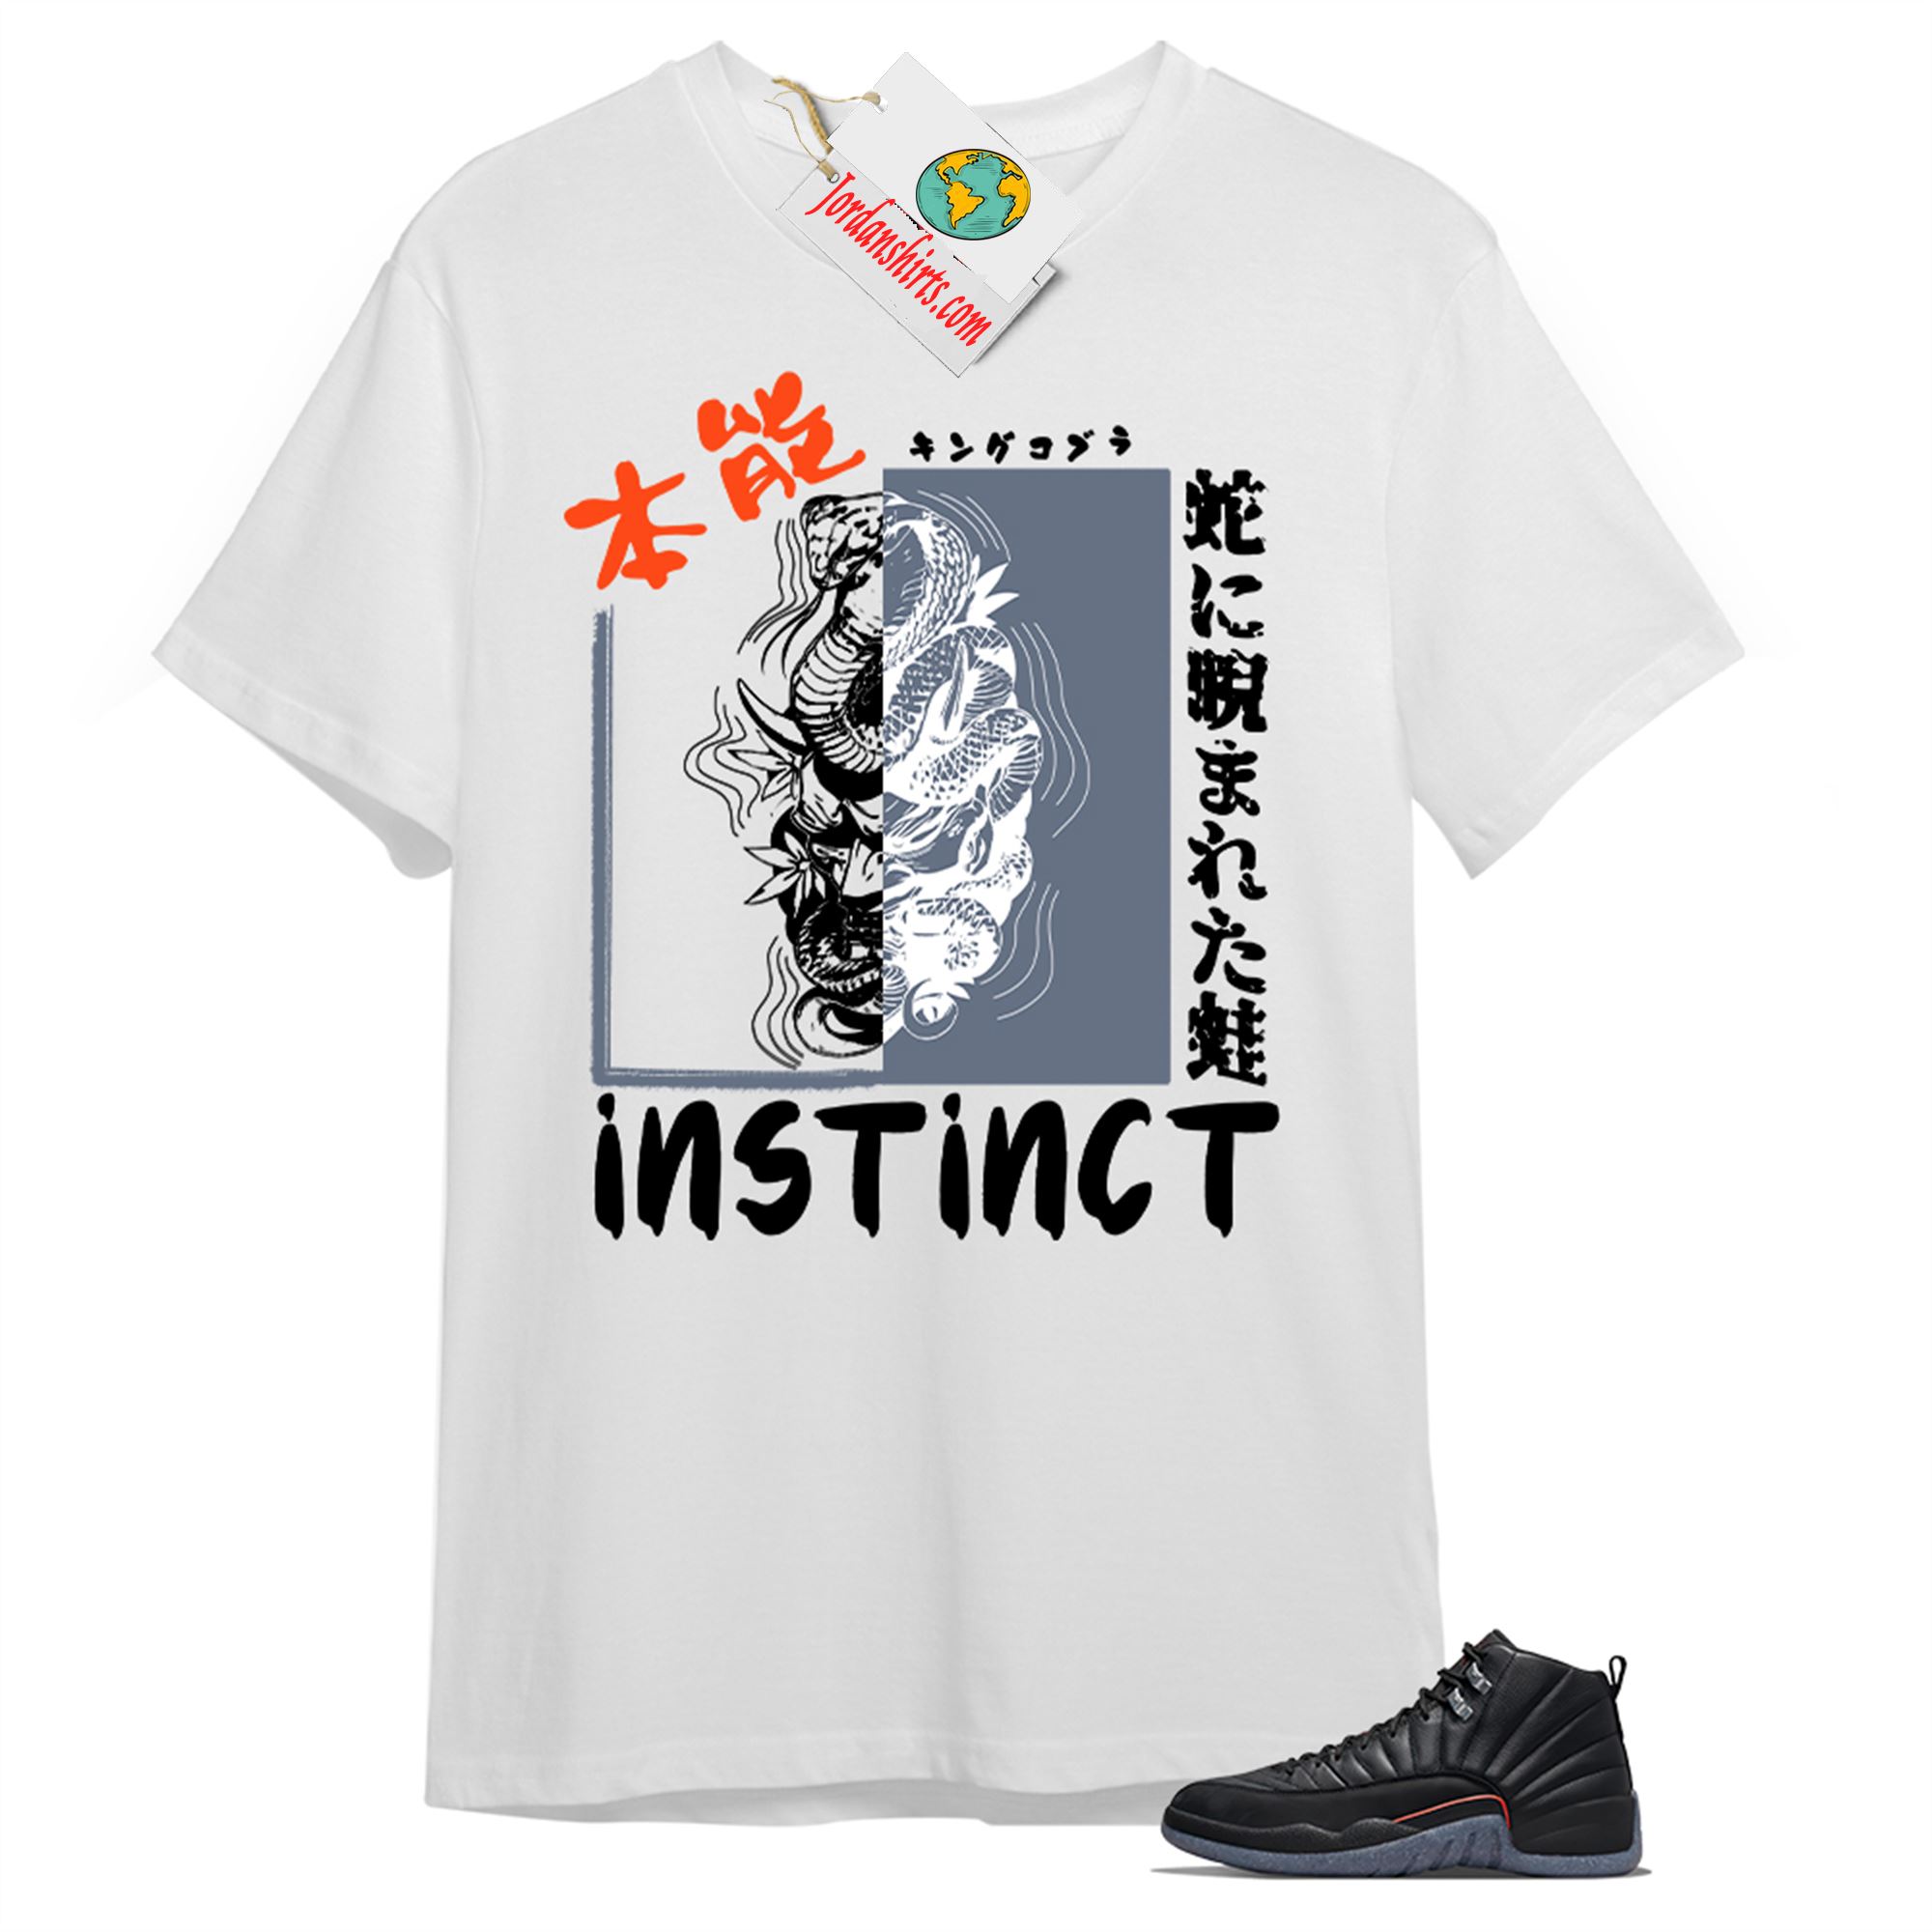 Jordan 12 Shirt, Instinct Fearless Snake White T-shirt Air Jordan 12 Utility Grind 12s Size Up To 5xl